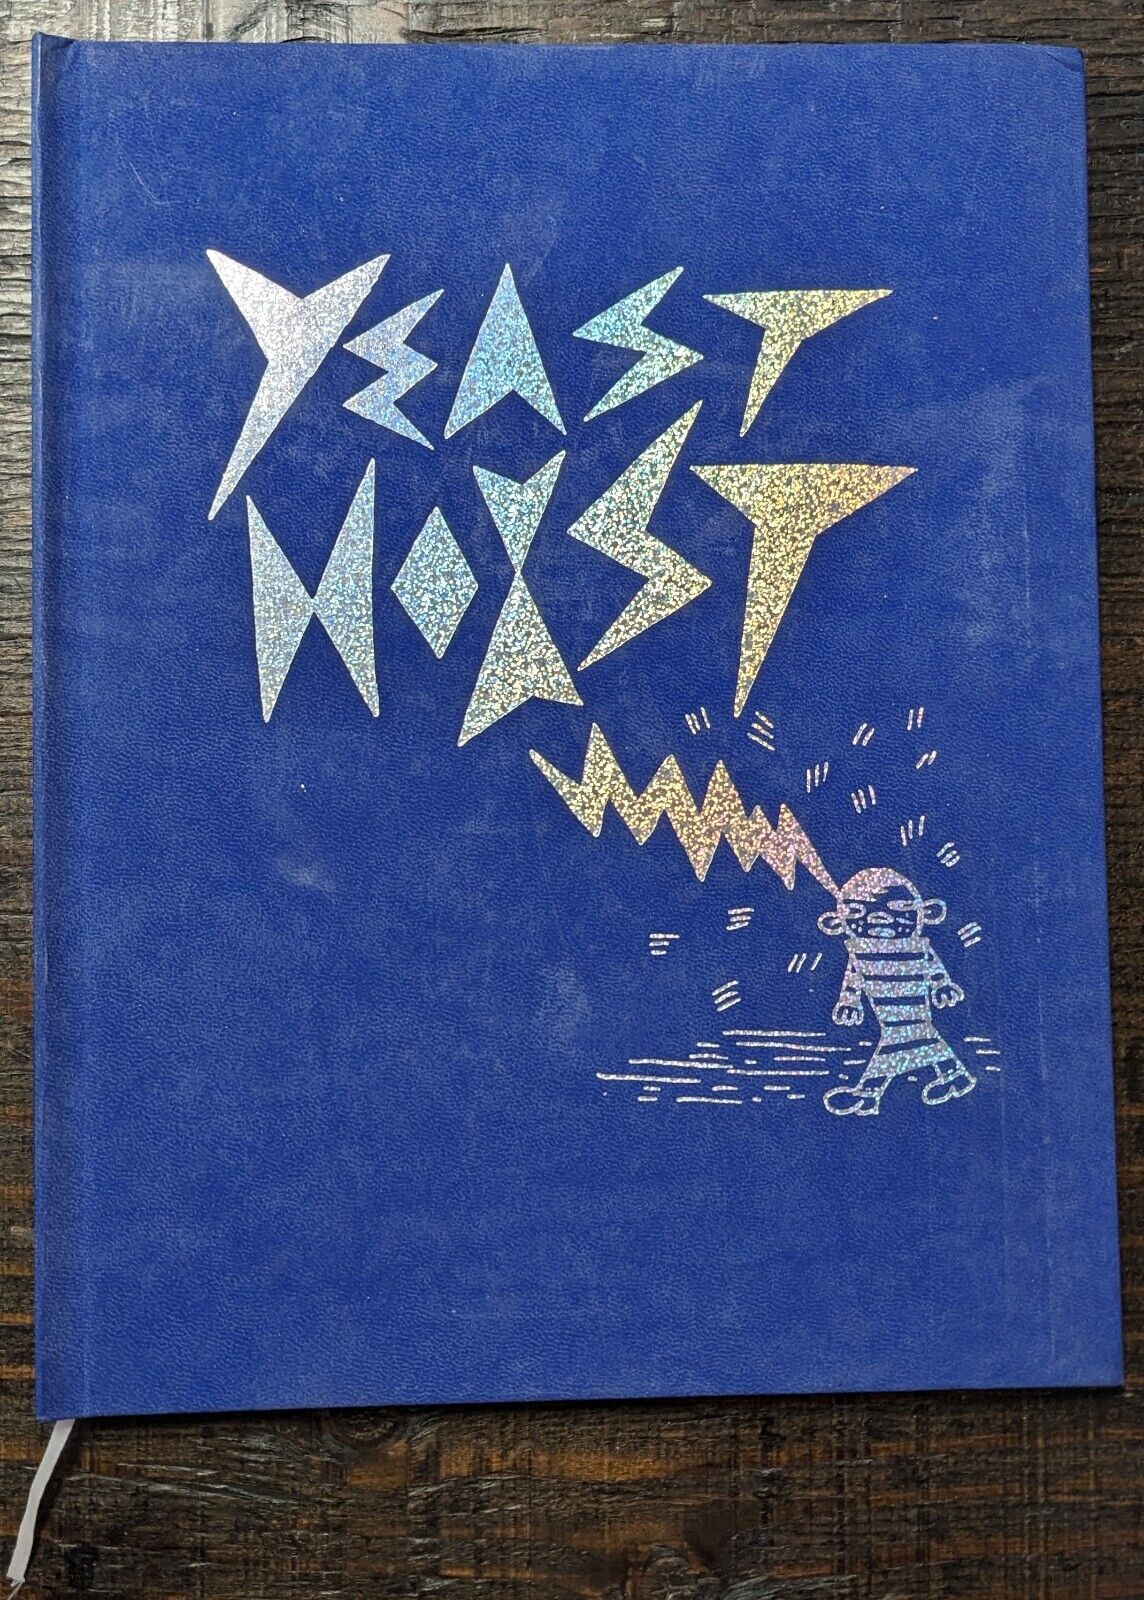 Ron Rege Jr. Self Published Yeast Hoist #12 Hardcover RARE